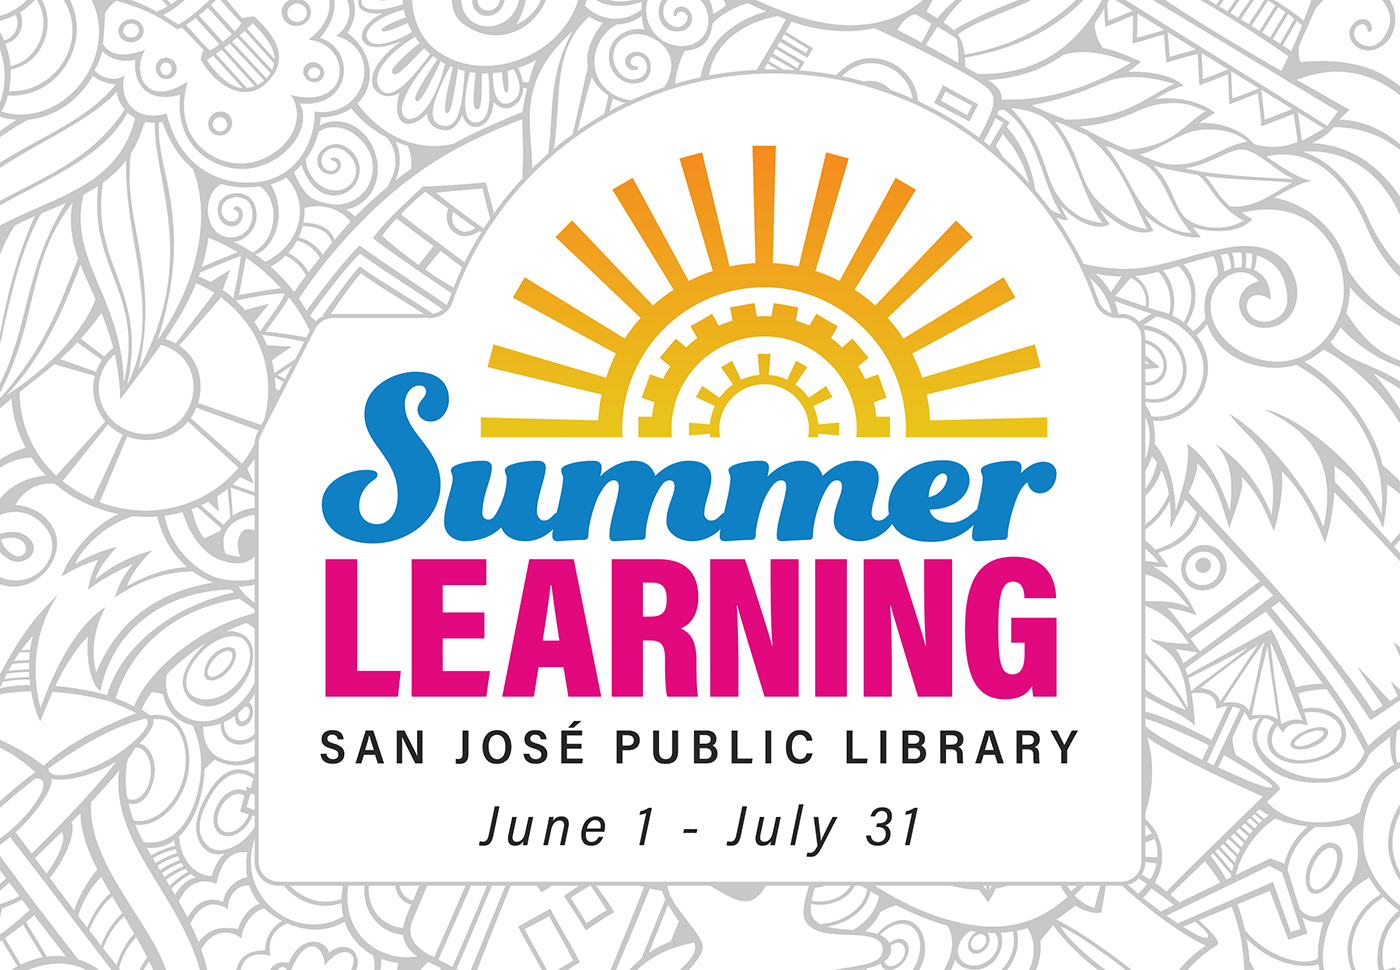 Summer Learning, June 1 - July 31.